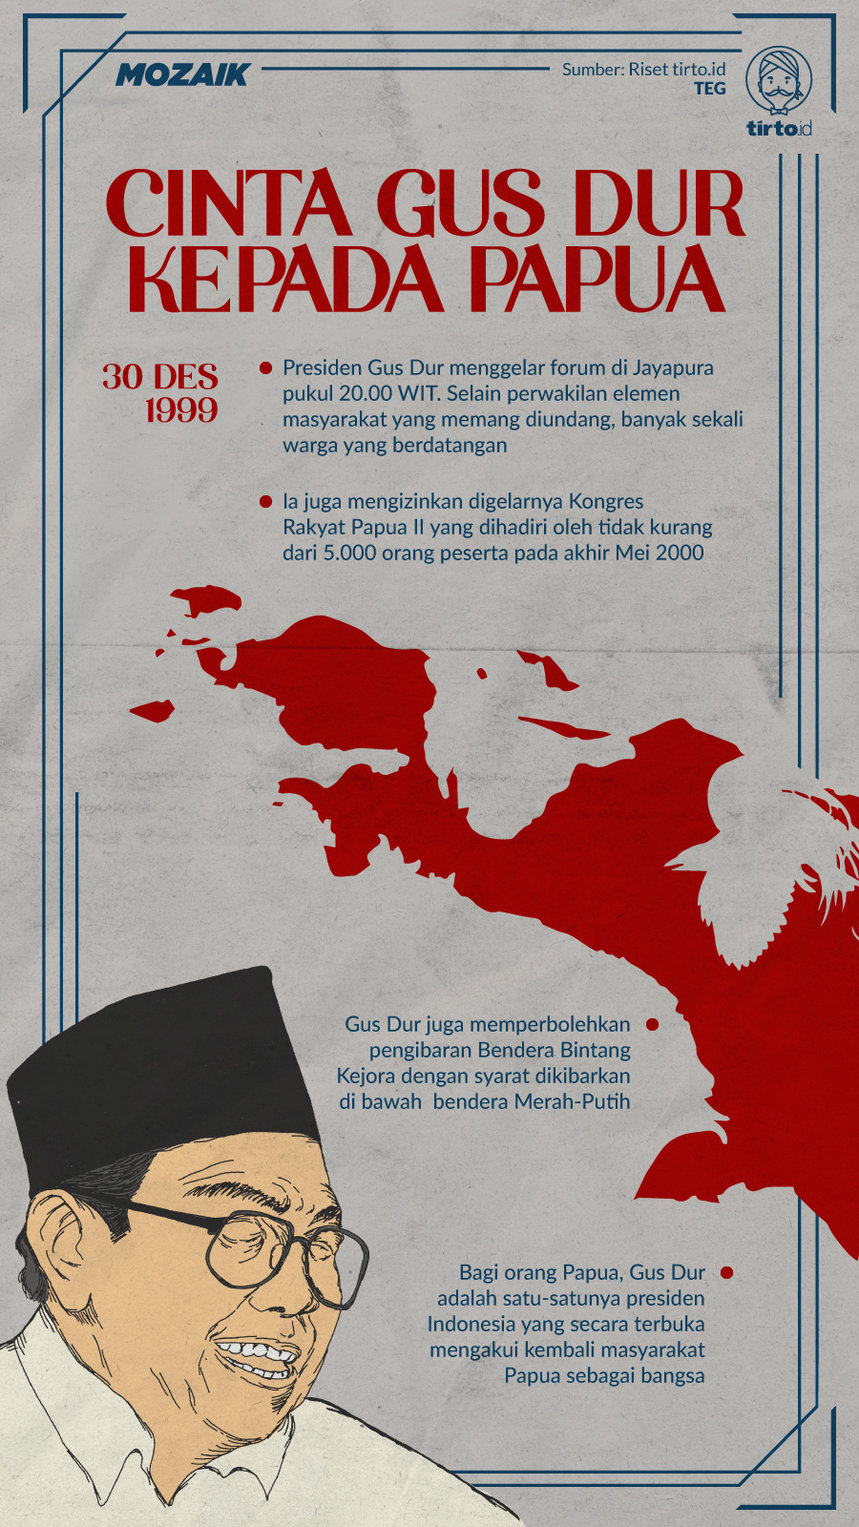 Infografik Mozaik Cinta Gus Dur Kepada Papua